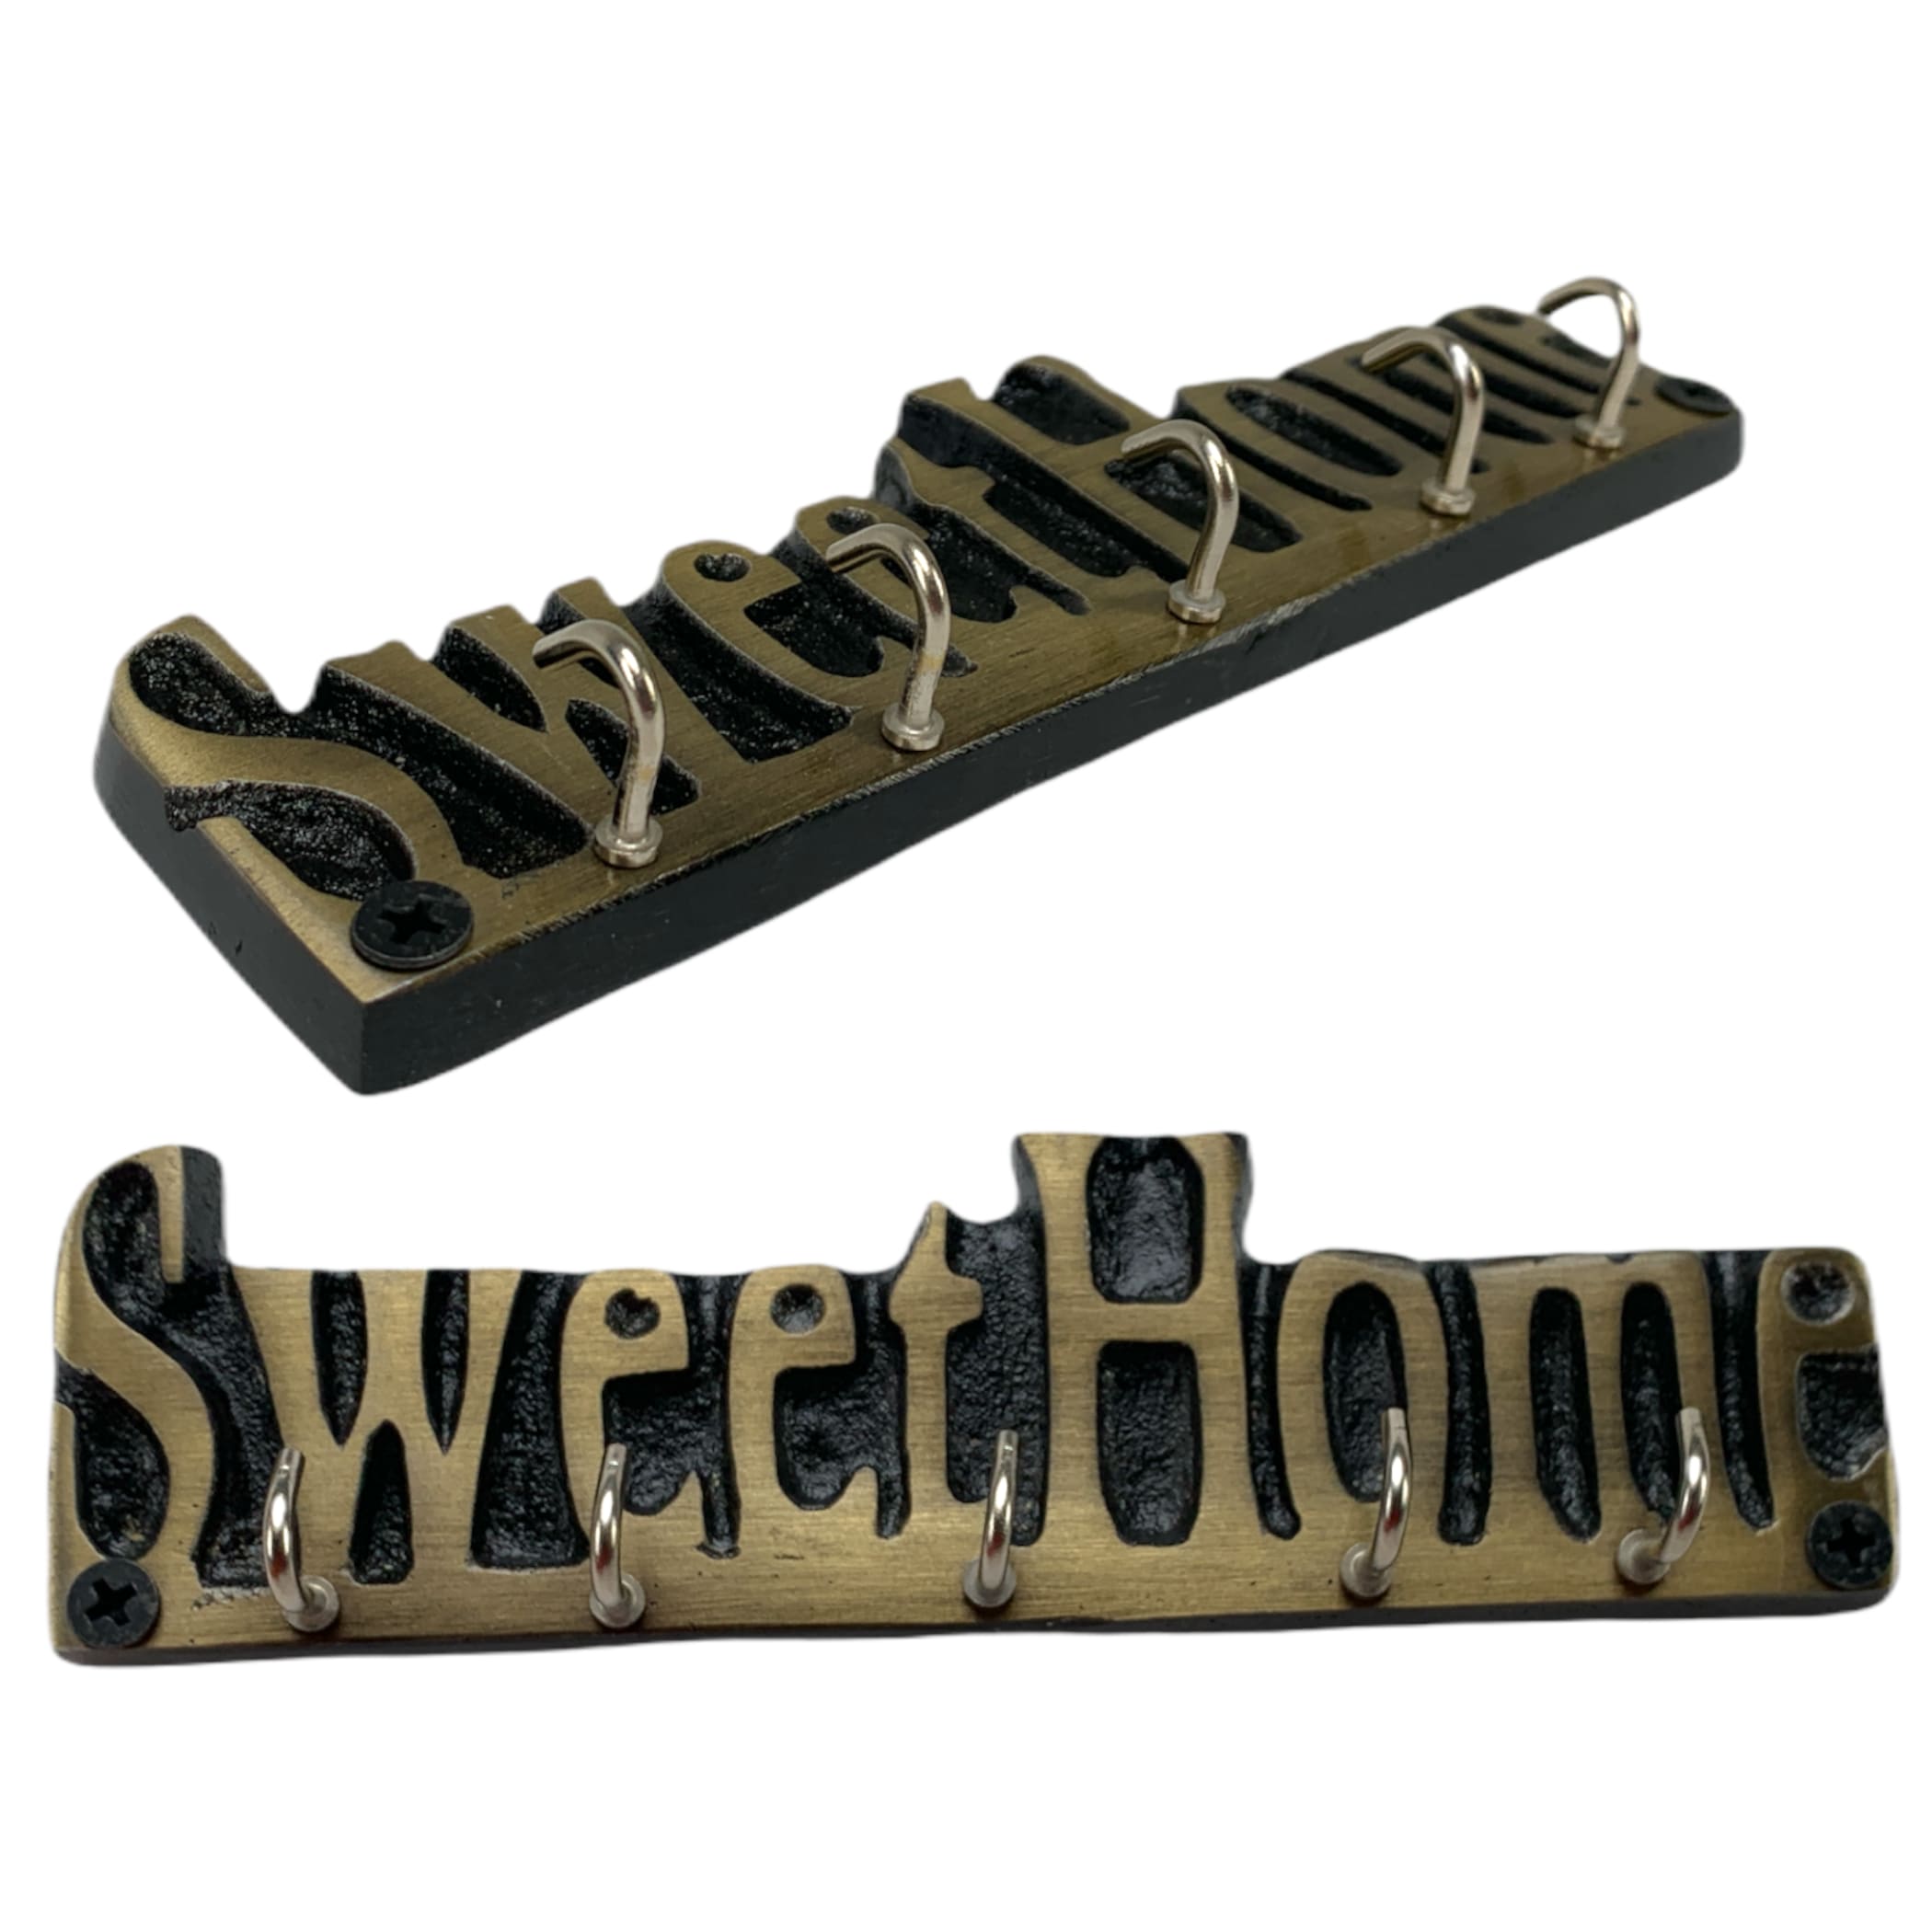 Sweet home key holder decorative and jewelry organiser